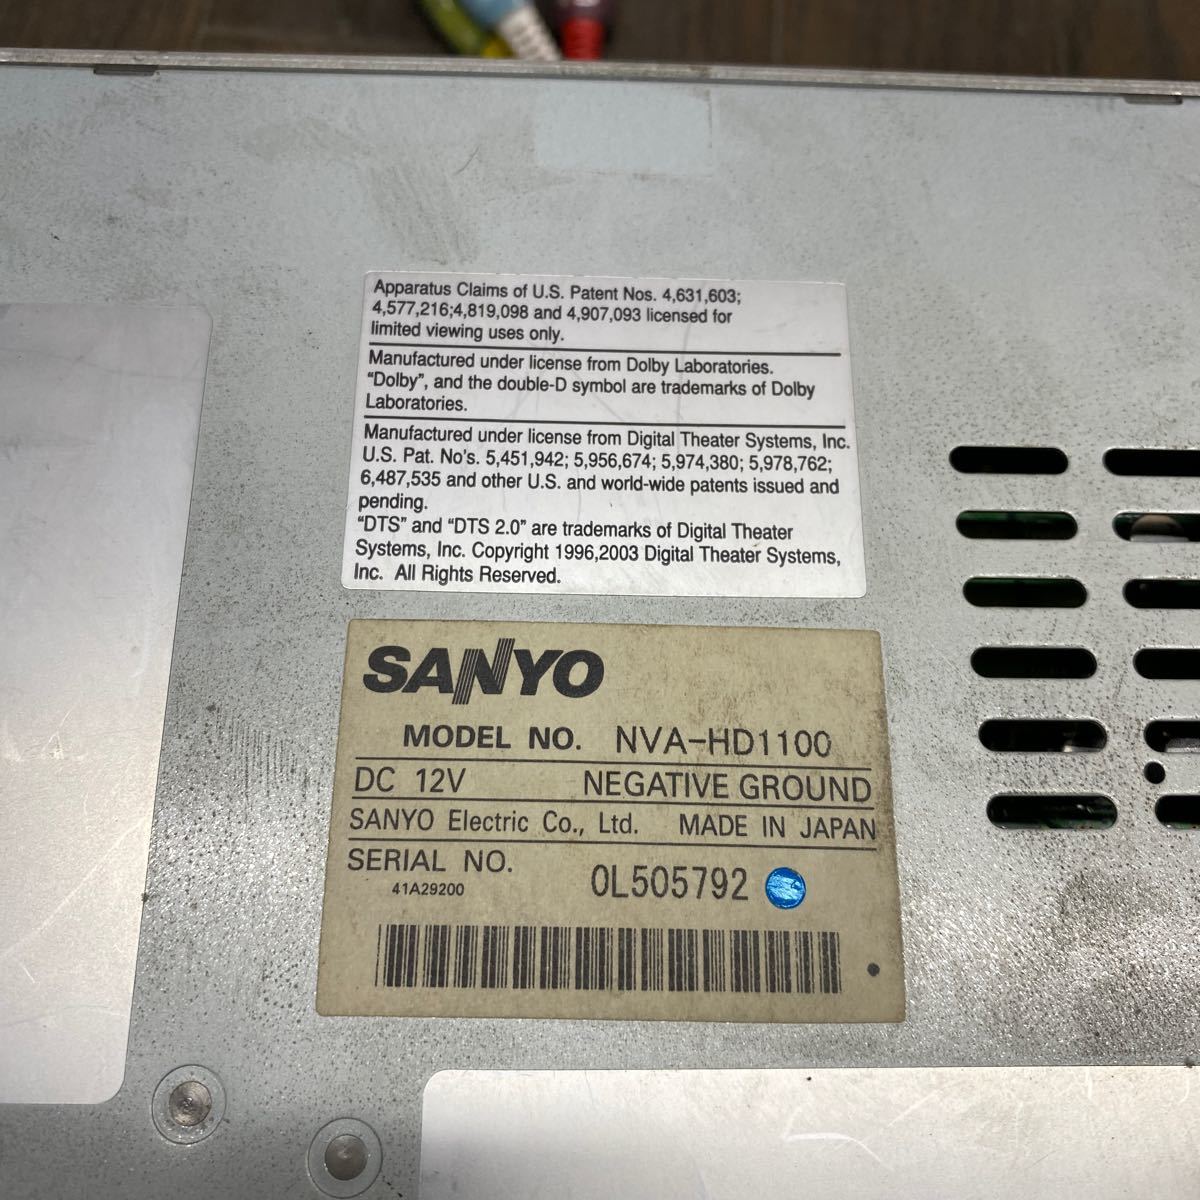 AV2-553  очень дешево   машина  navi  SANYO NVA-HD1100 0L505792 HDD navi  CD DVD  включение питания  не проверена   продаю как нерабочий  